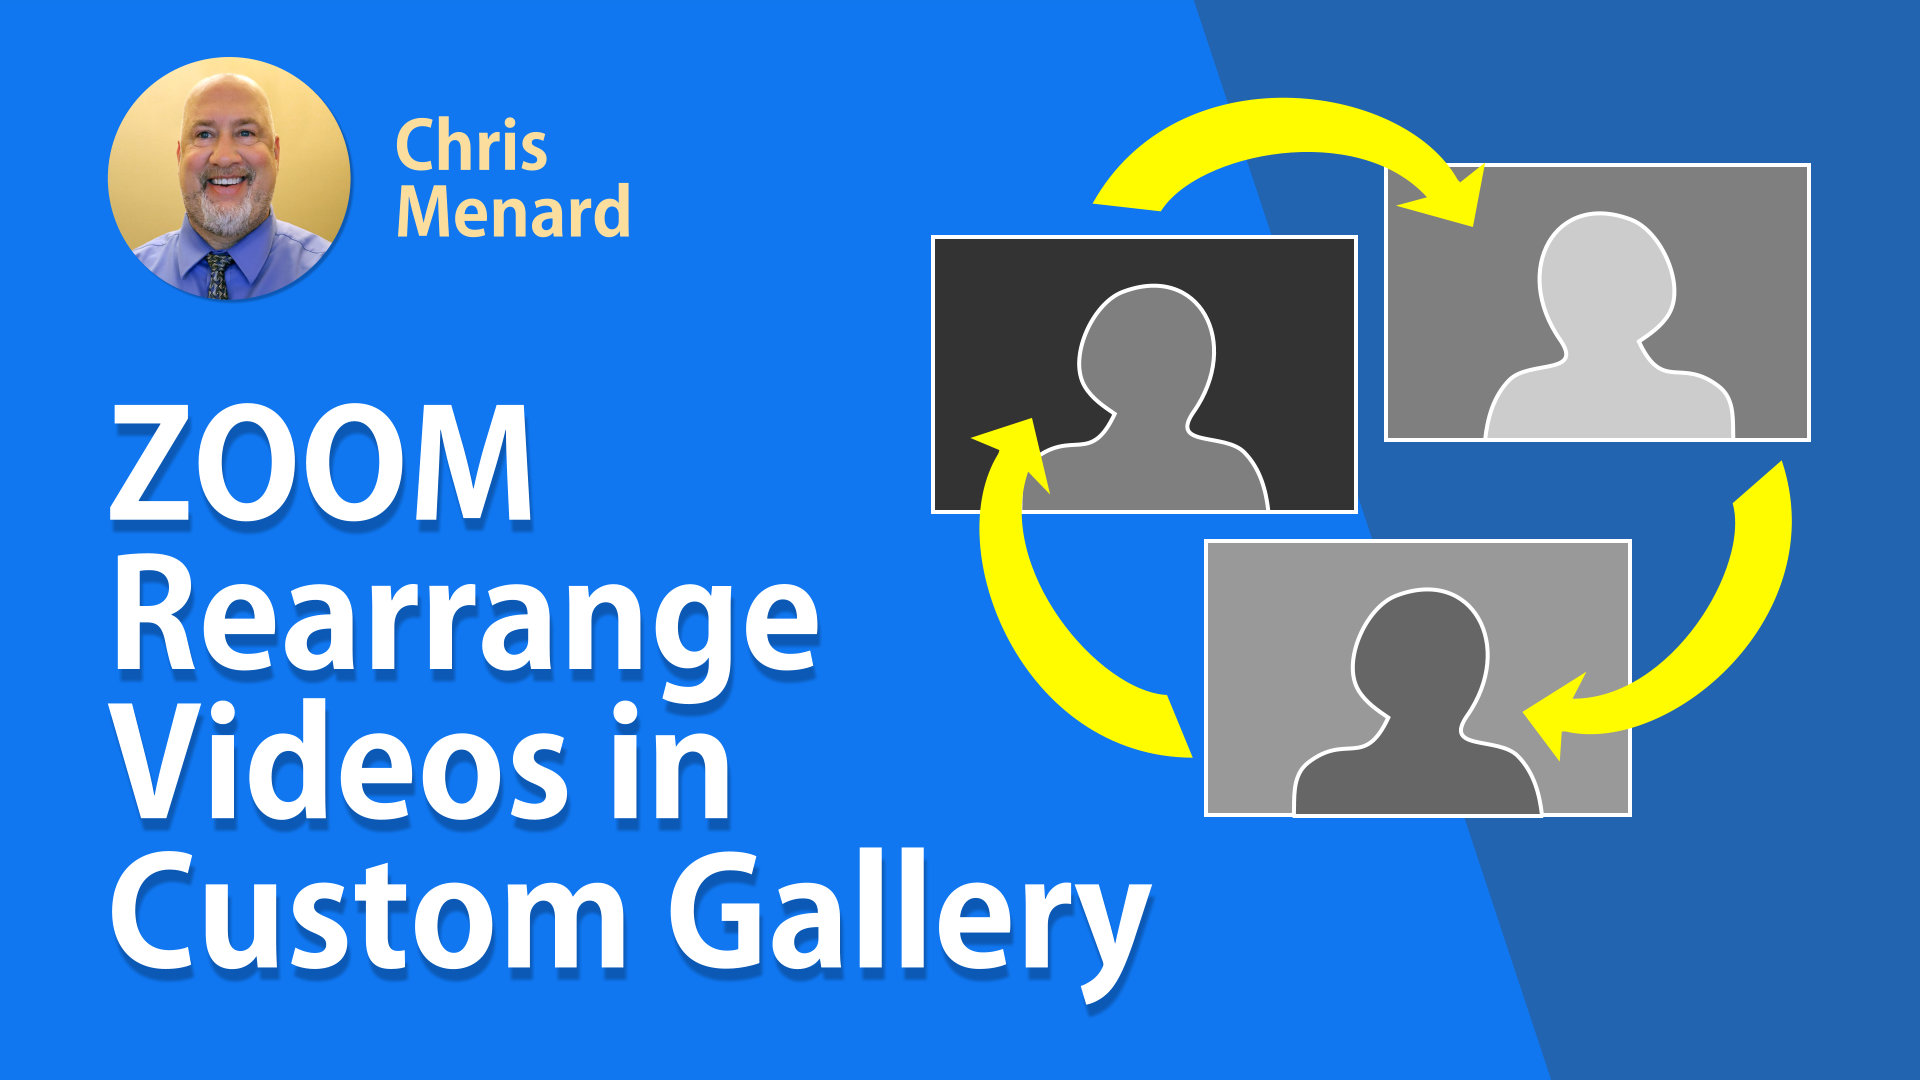 ZOOM Rearrange Videos in Gallery View: Chris Menard Training